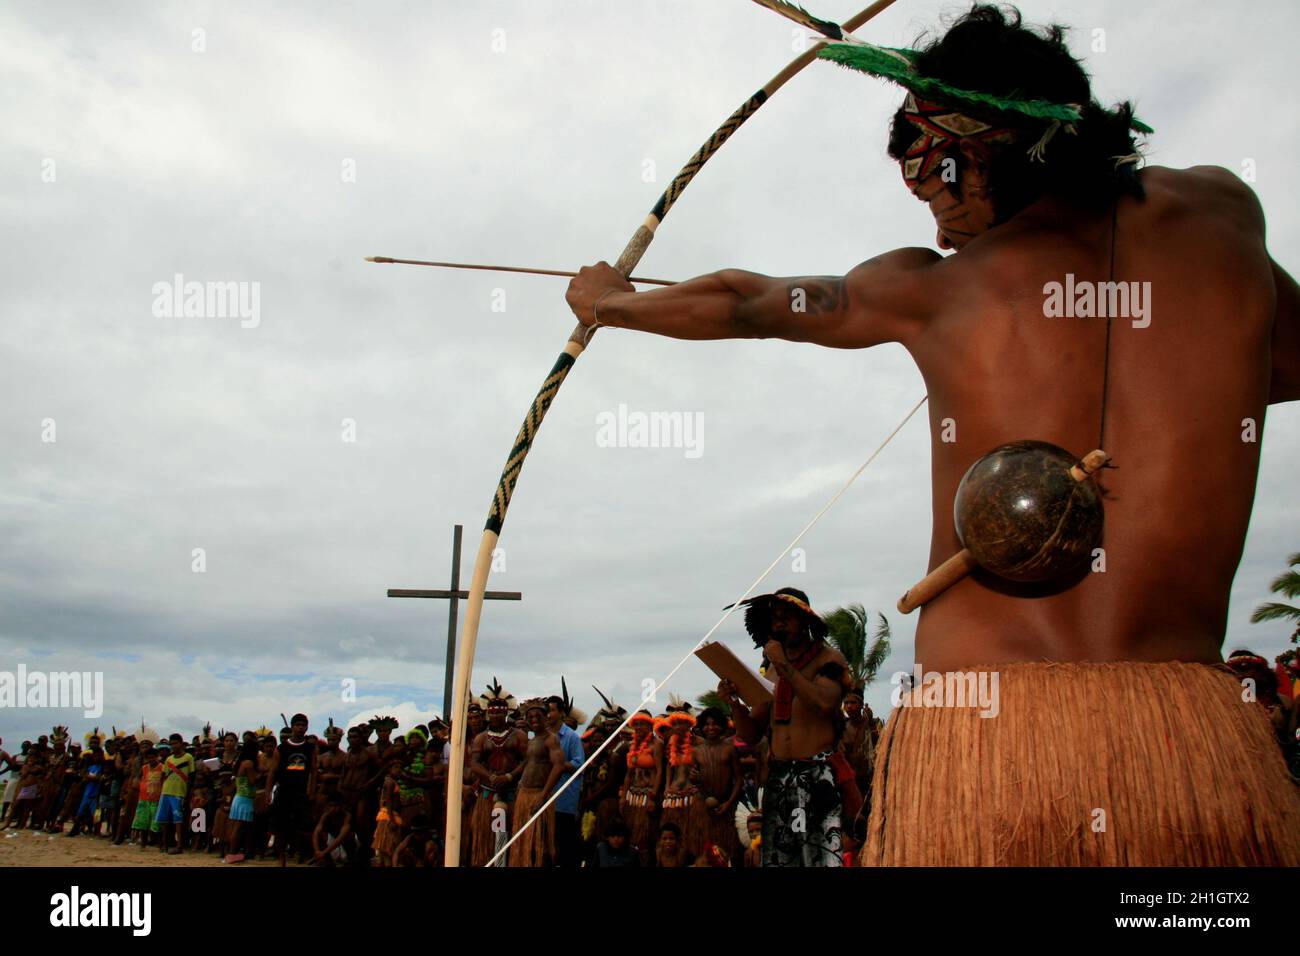 Amazon tribe bow arrow -Fotos und -Bildmaterial in hoher Auflösung – Alamy